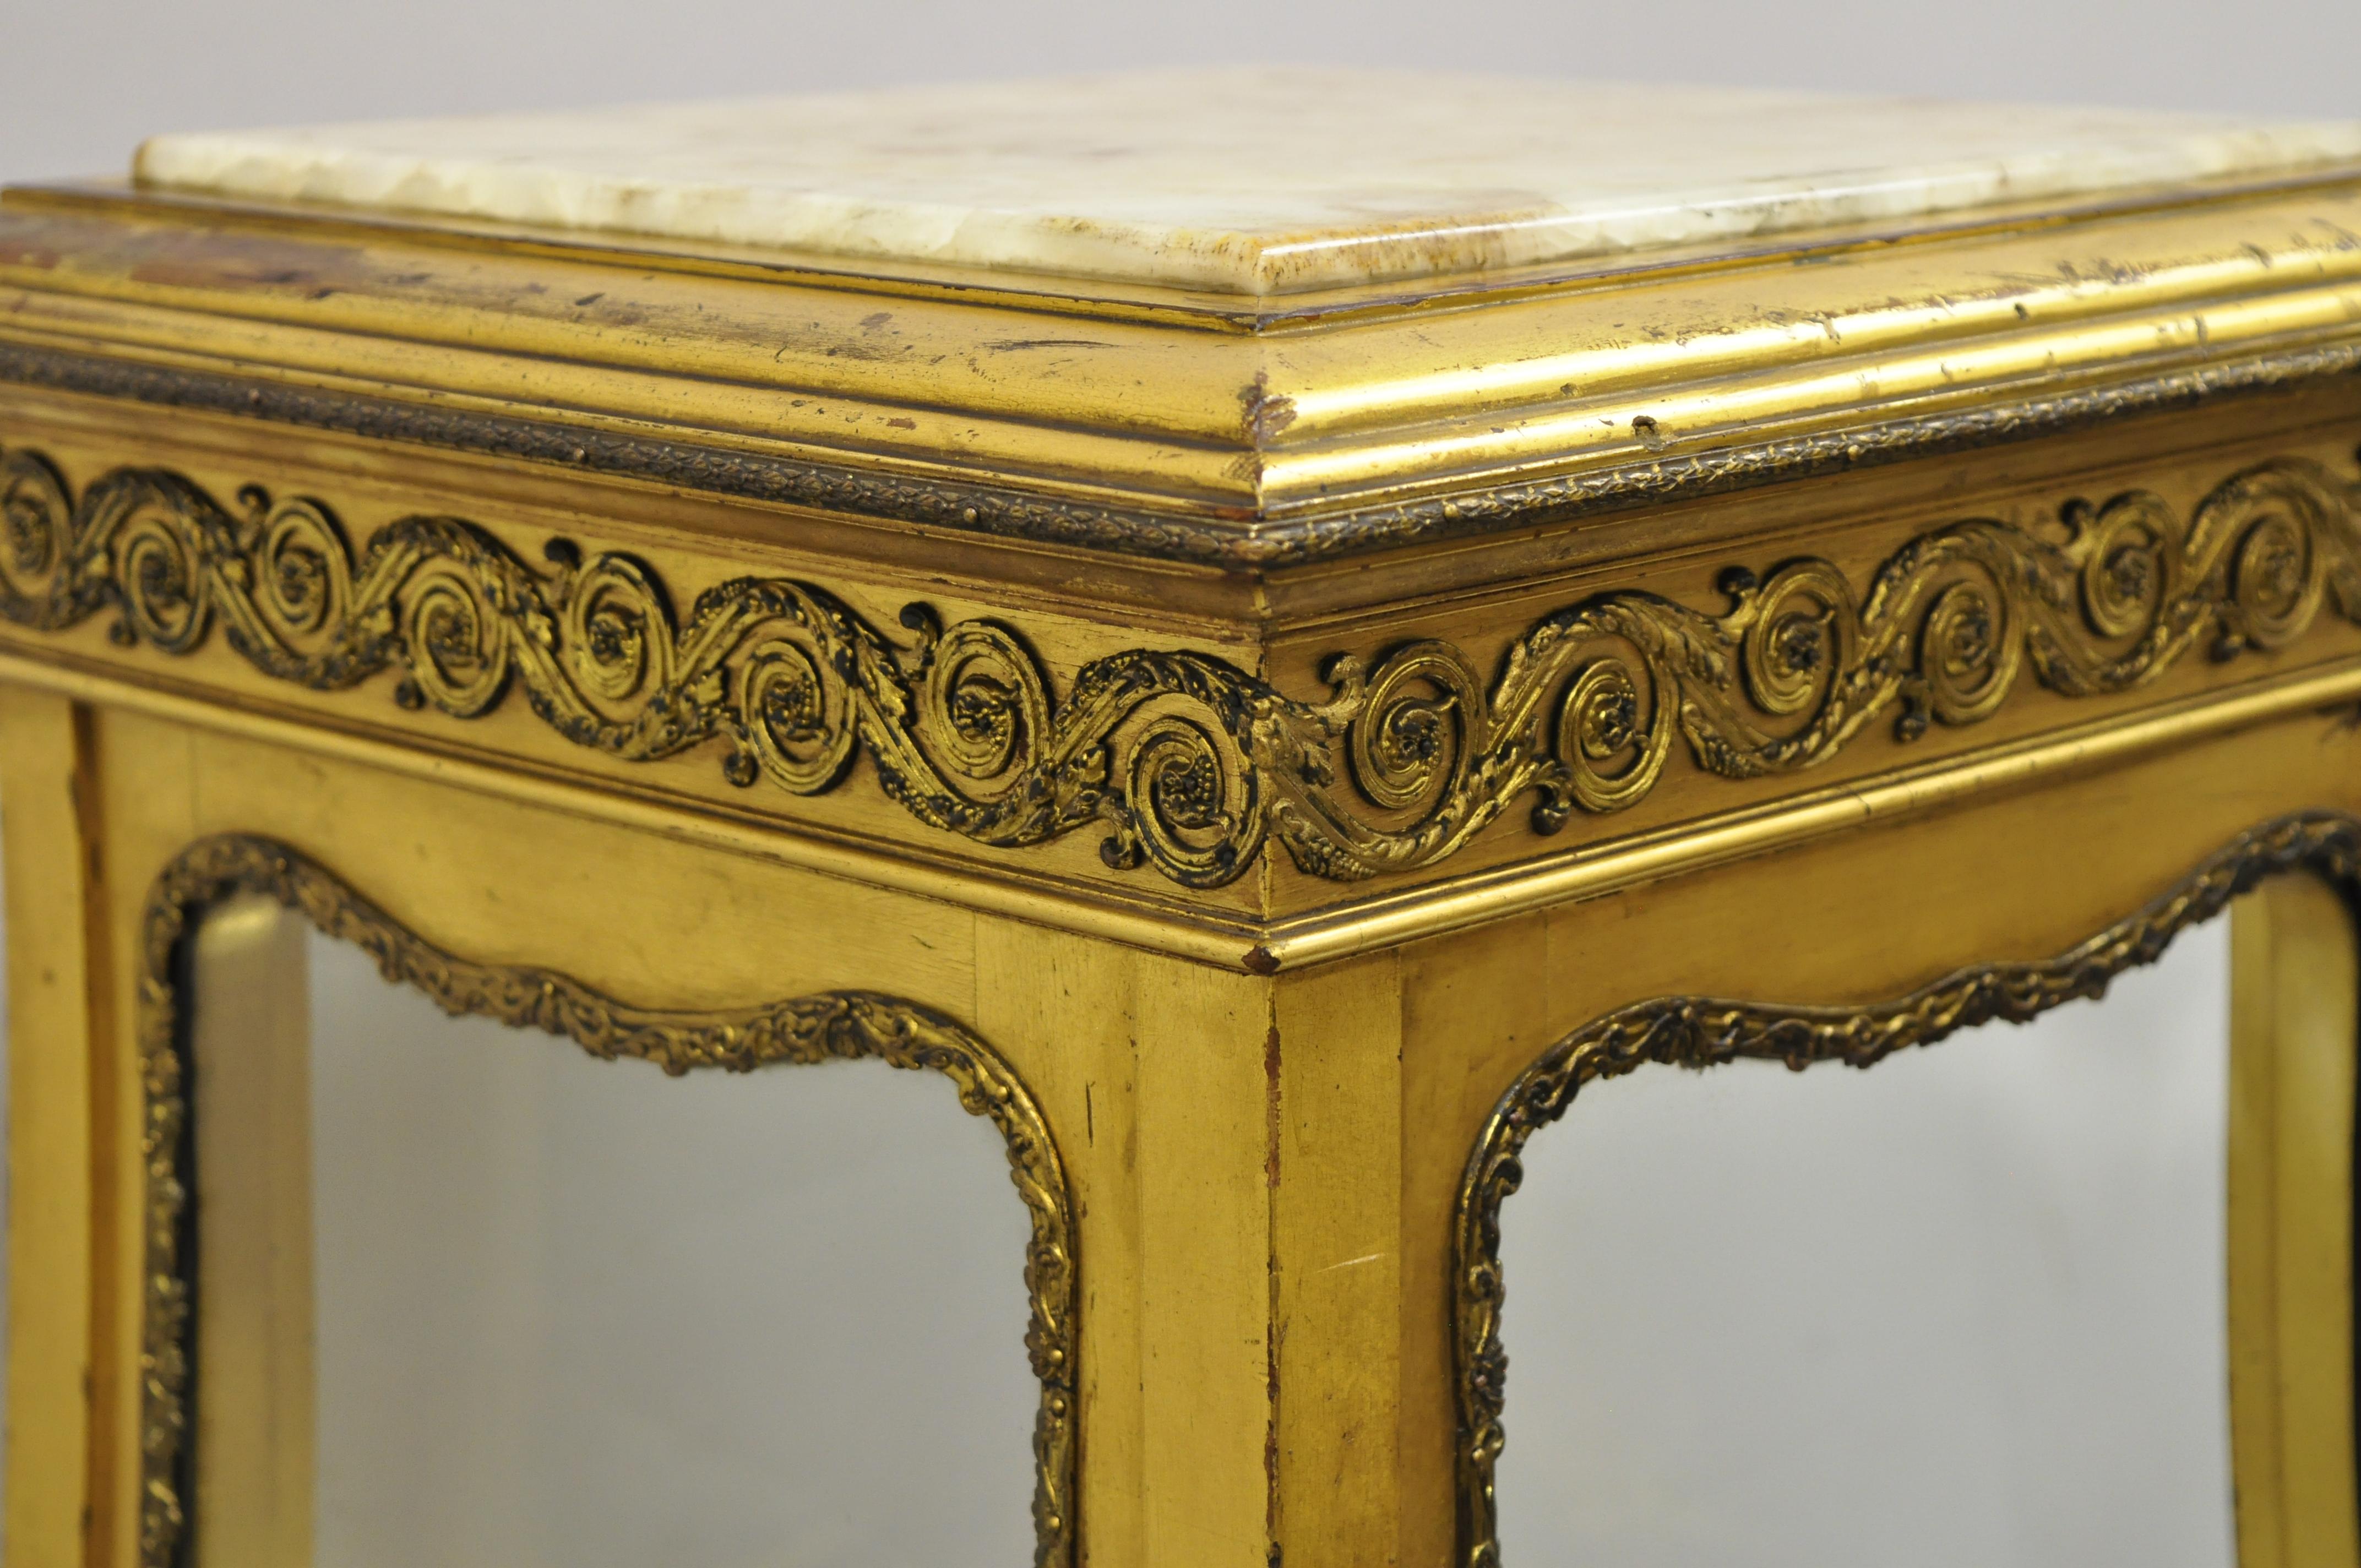 19th Century French Empire Wing Cherub Gold Gilt Vitrine Curio Display Cabinet Onyx Pedestal For Sale